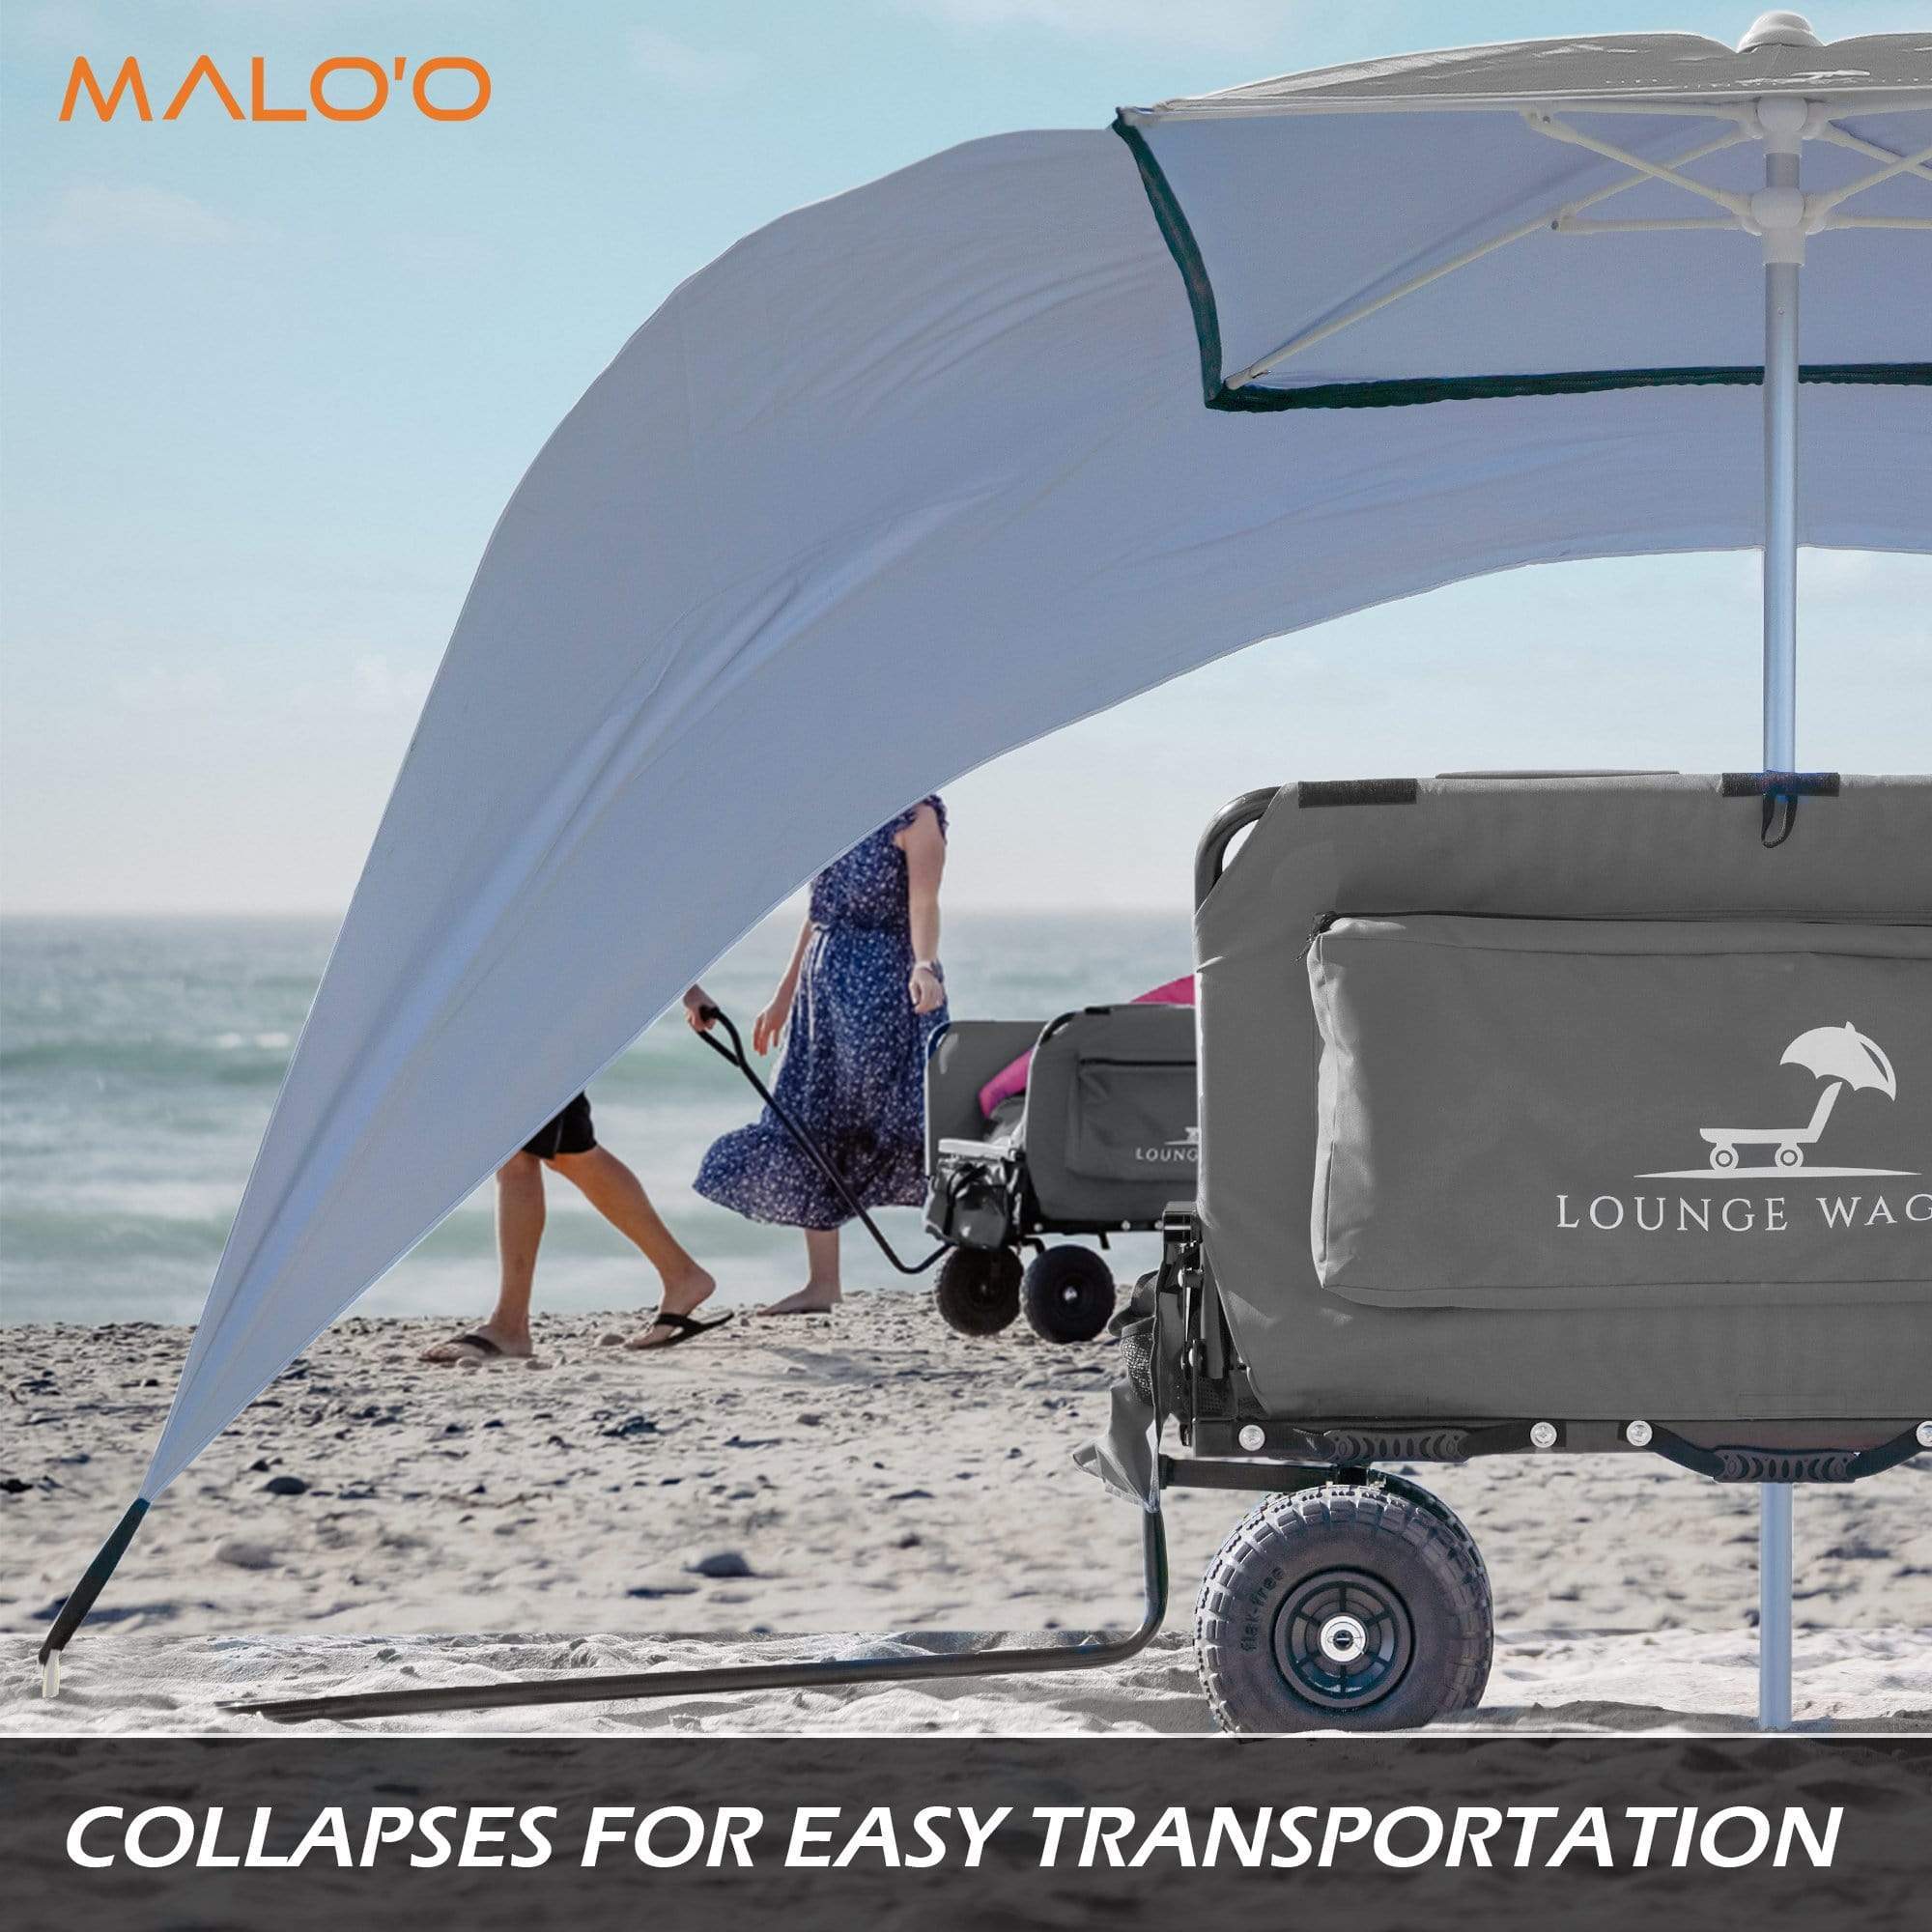 Malo&#39;o Racks Lounge Wagon Beach Umbrella